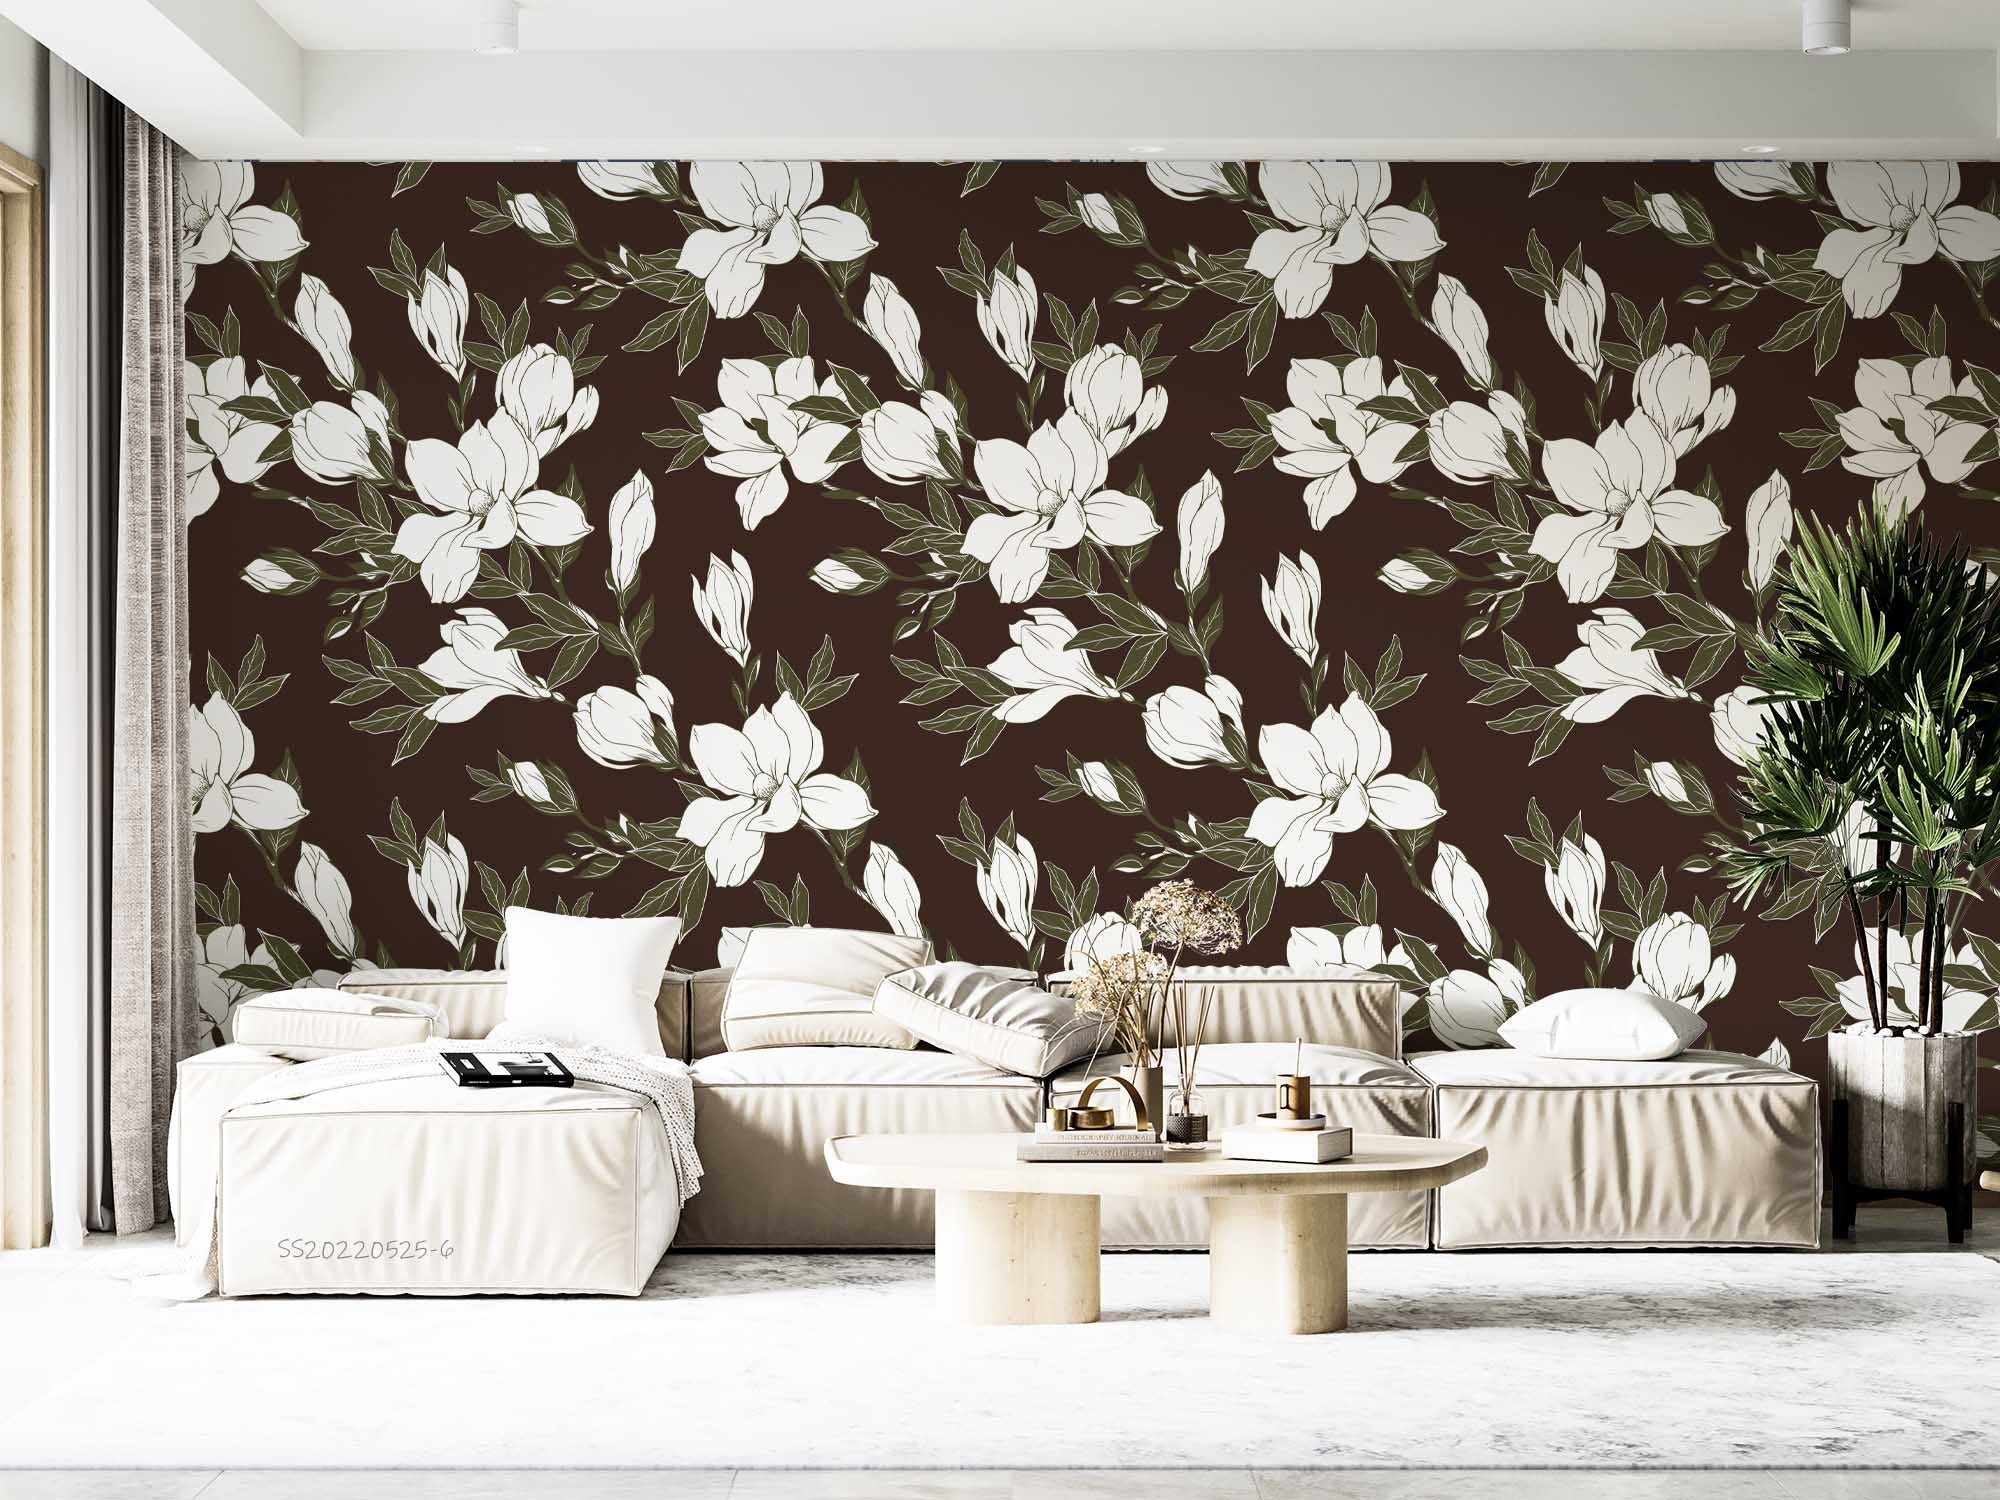 3D Vintage Magnolia Floral Background Wall Mural Wallpaper GD 1230- Jess Art Decoration